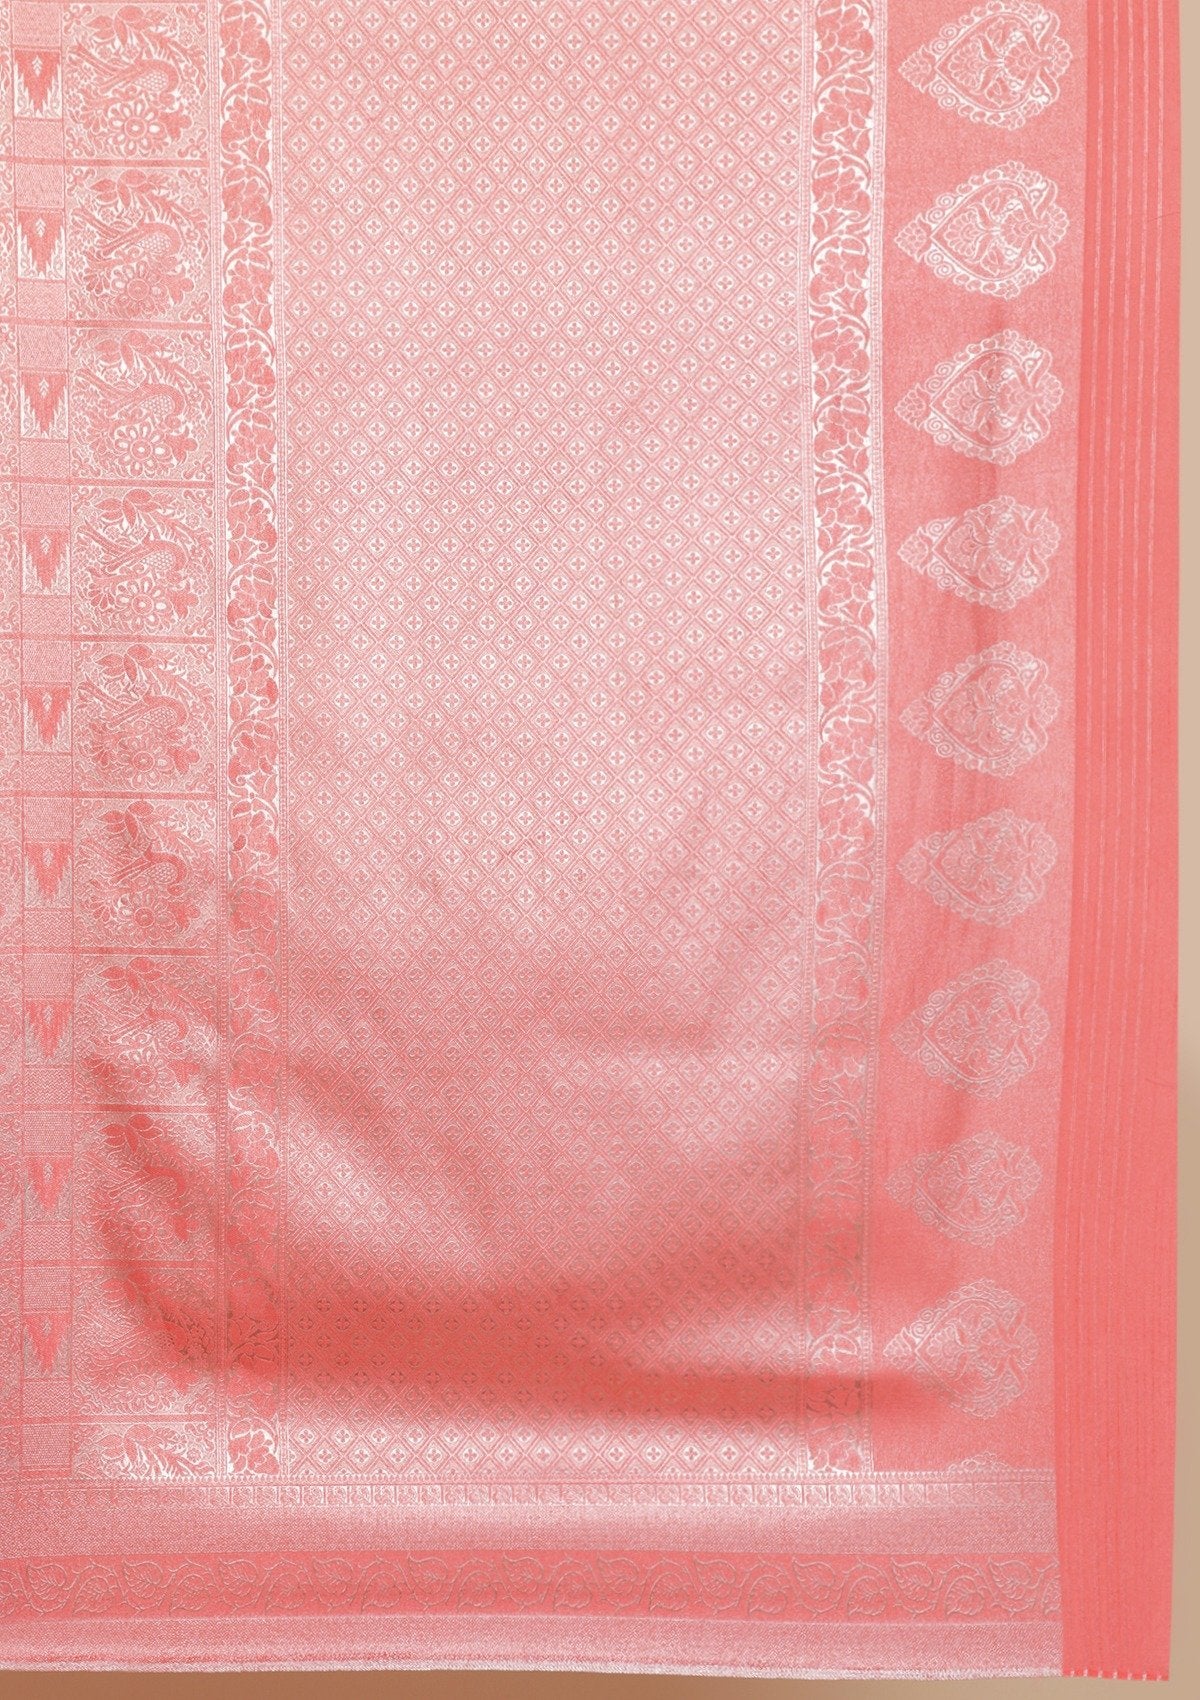 Peach Zariwork Art Silk Designer Saree - koskii